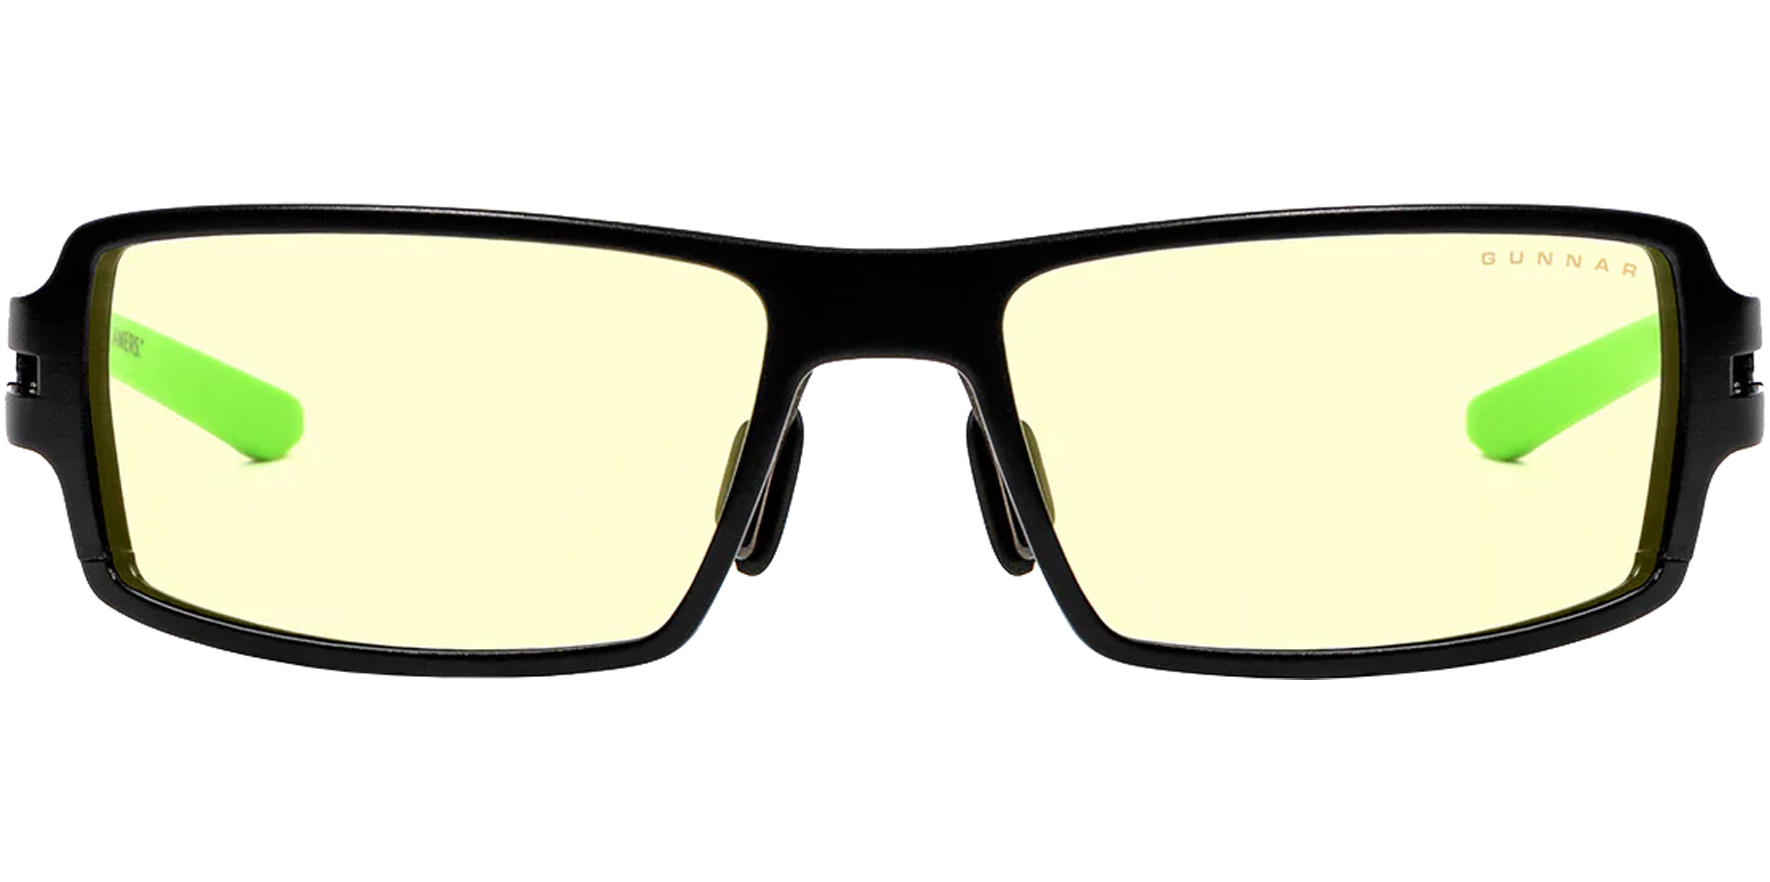 Gunnar Rpg Razer Edition Onyx Rectangle Gaming Computer Glasses Eyedictive